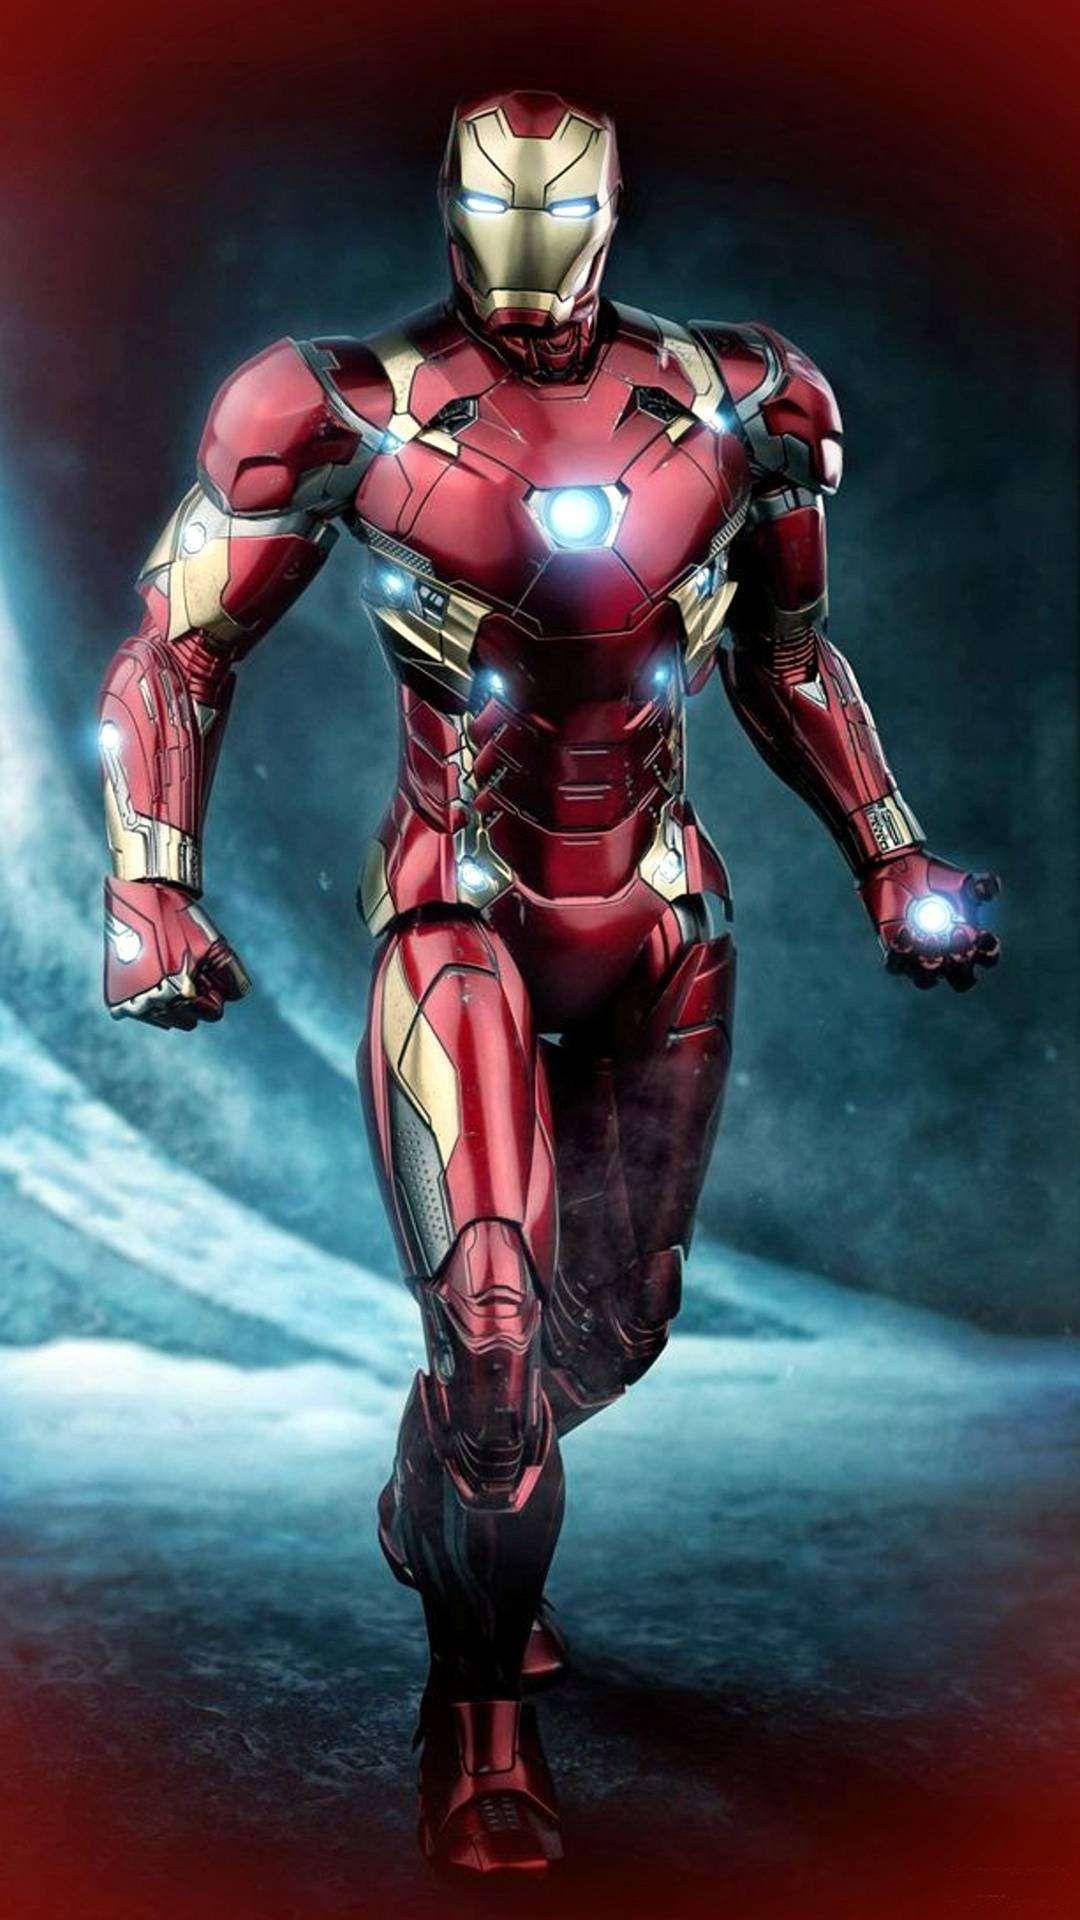 Iron Man New Mark 45 iPhone Wallpaper. iPhone Wallpaper in 2019